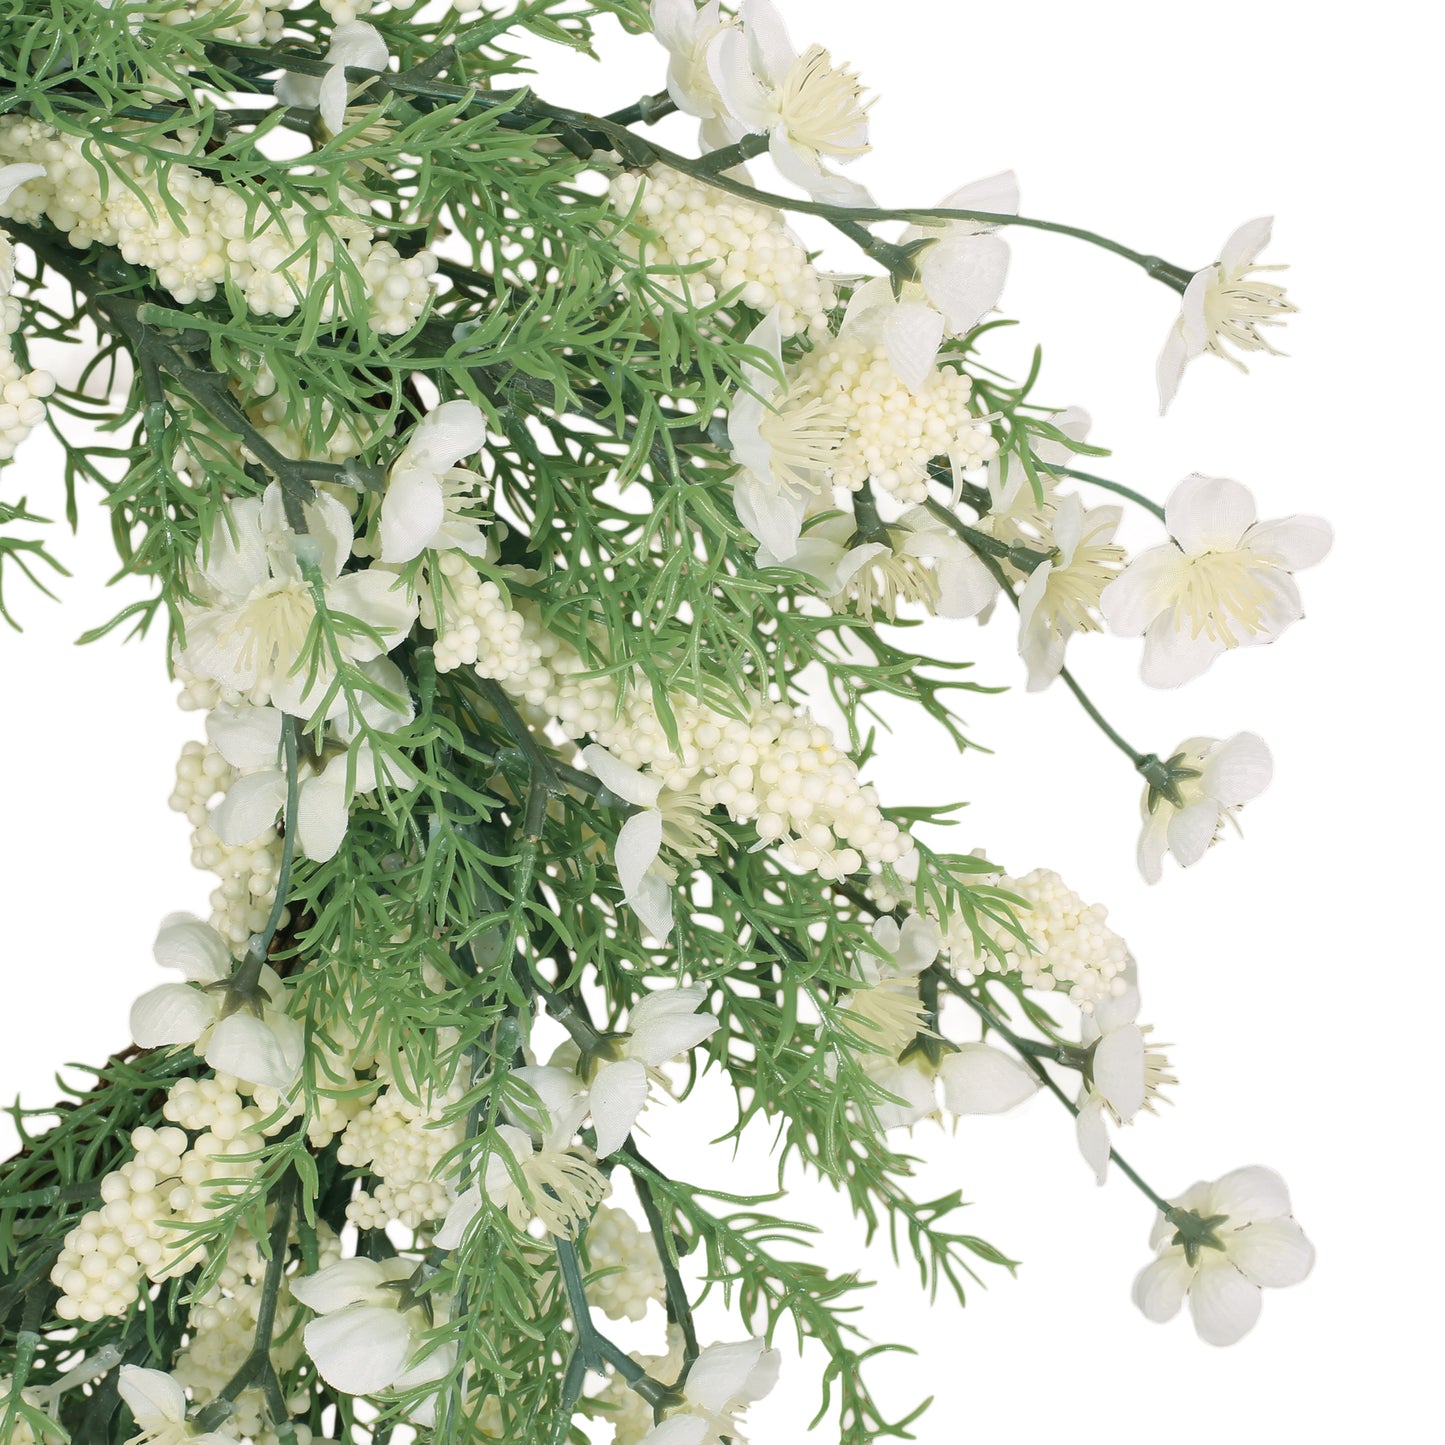 Wallsten 30" Plum Blossom Artificial Silk Wreath, Green and White